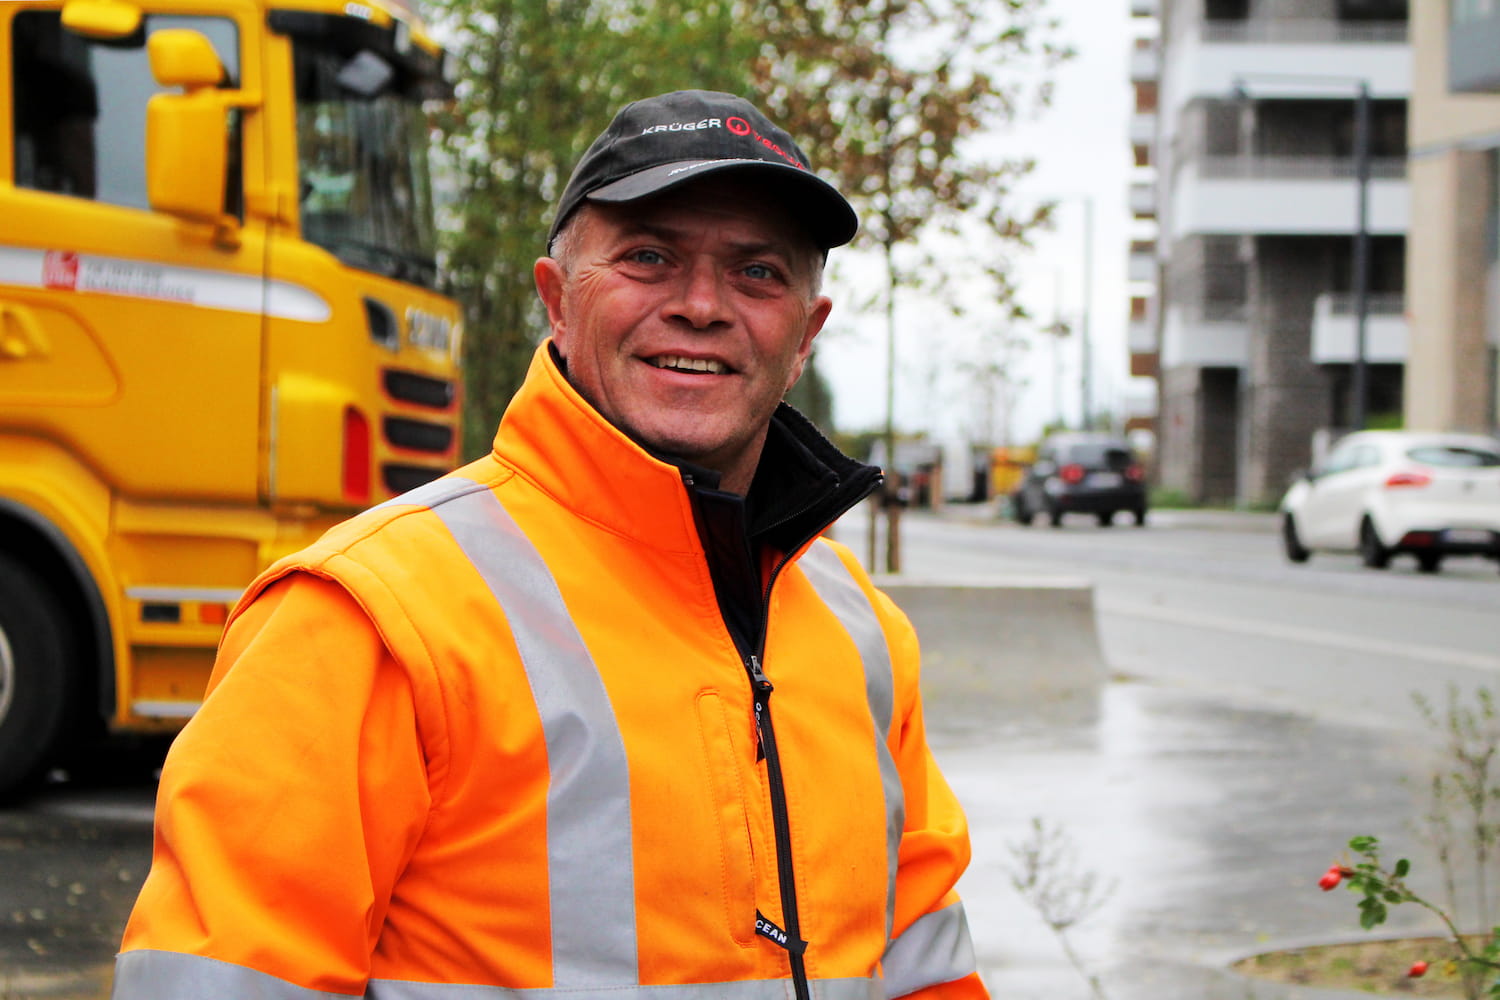 Kim er driftsassistent i Ørestad Vandlaug og er med til at holde Ørestad på skinner. Sammen med Vandlaugets driftsleder passer han Ørestads kanaler og søer.